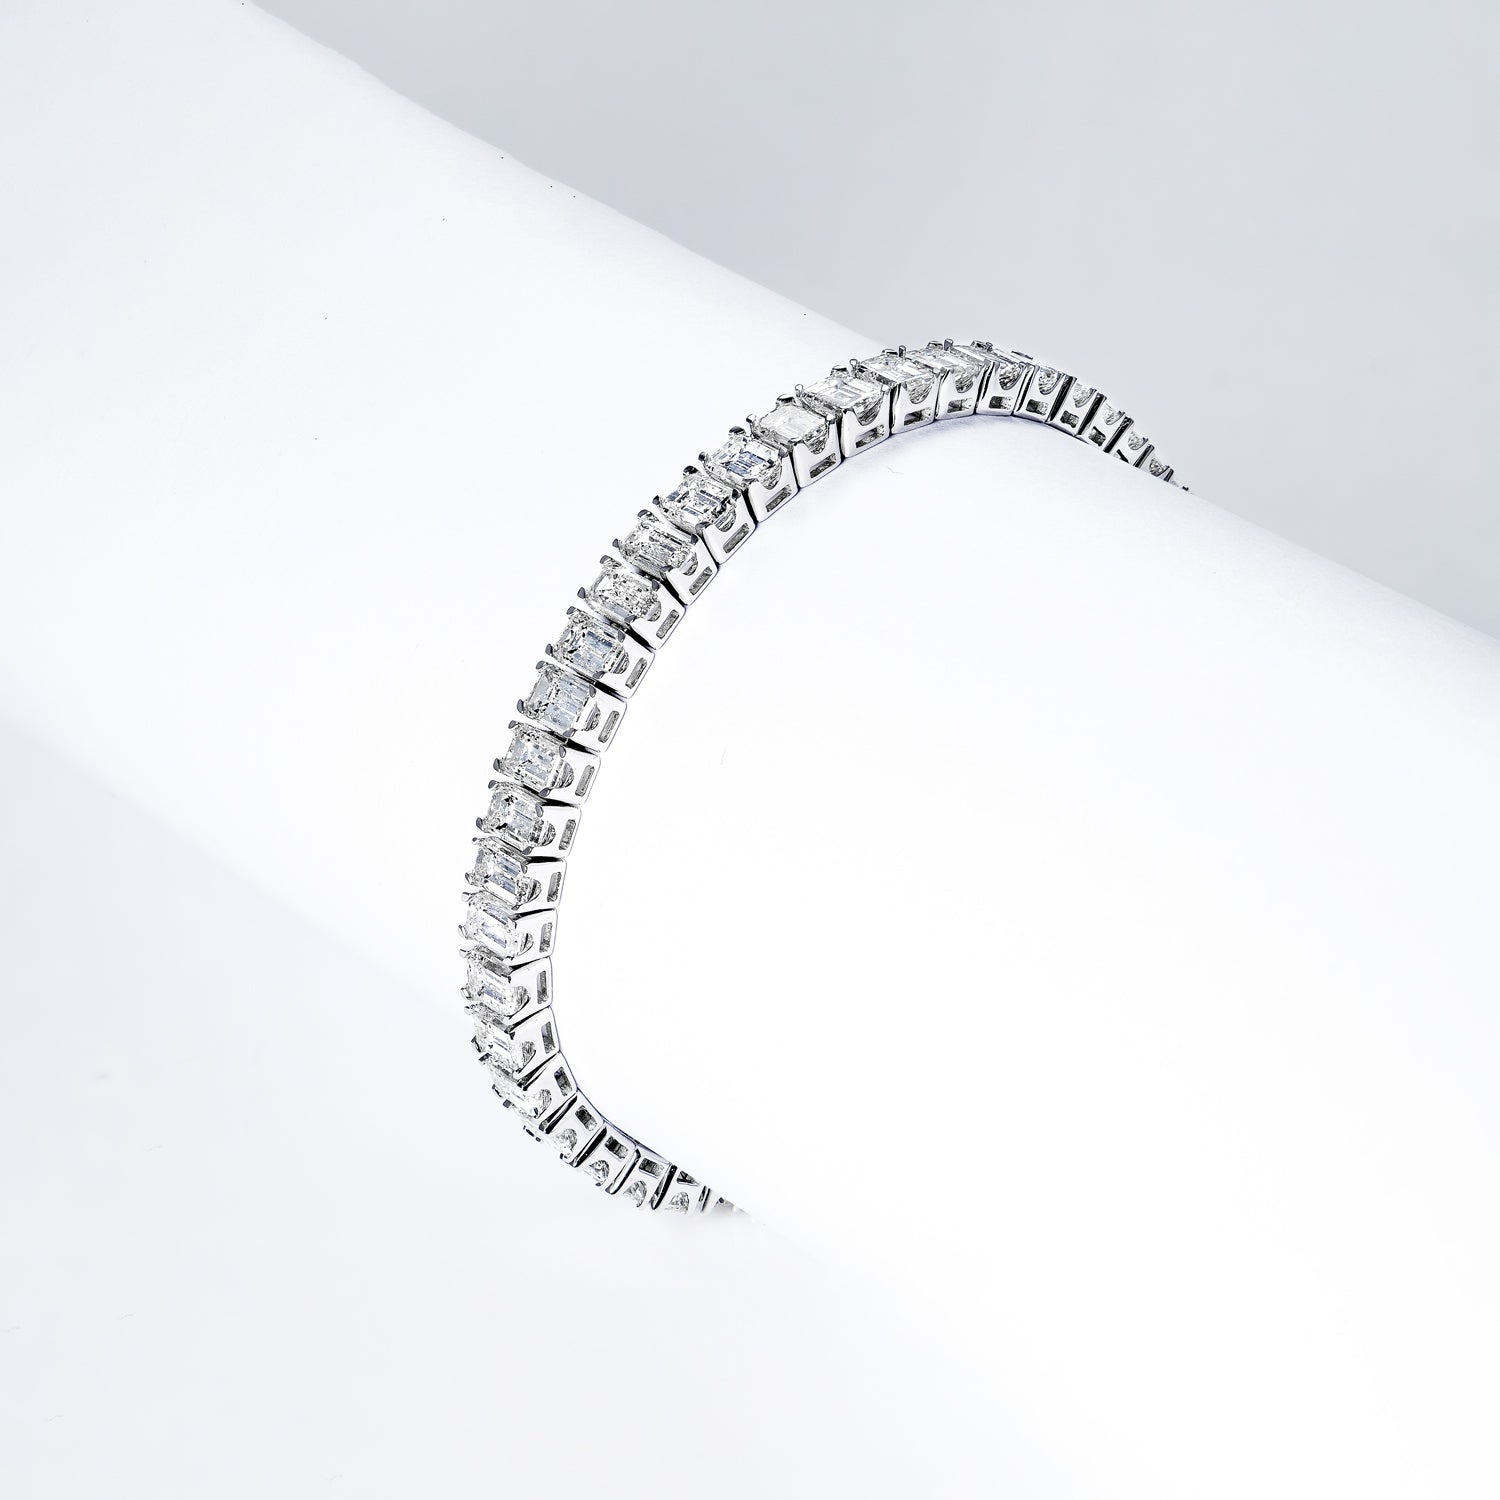 Blair 18 Carat Emerald Cut Diamond Single Row Bracelet in 18k White Gold